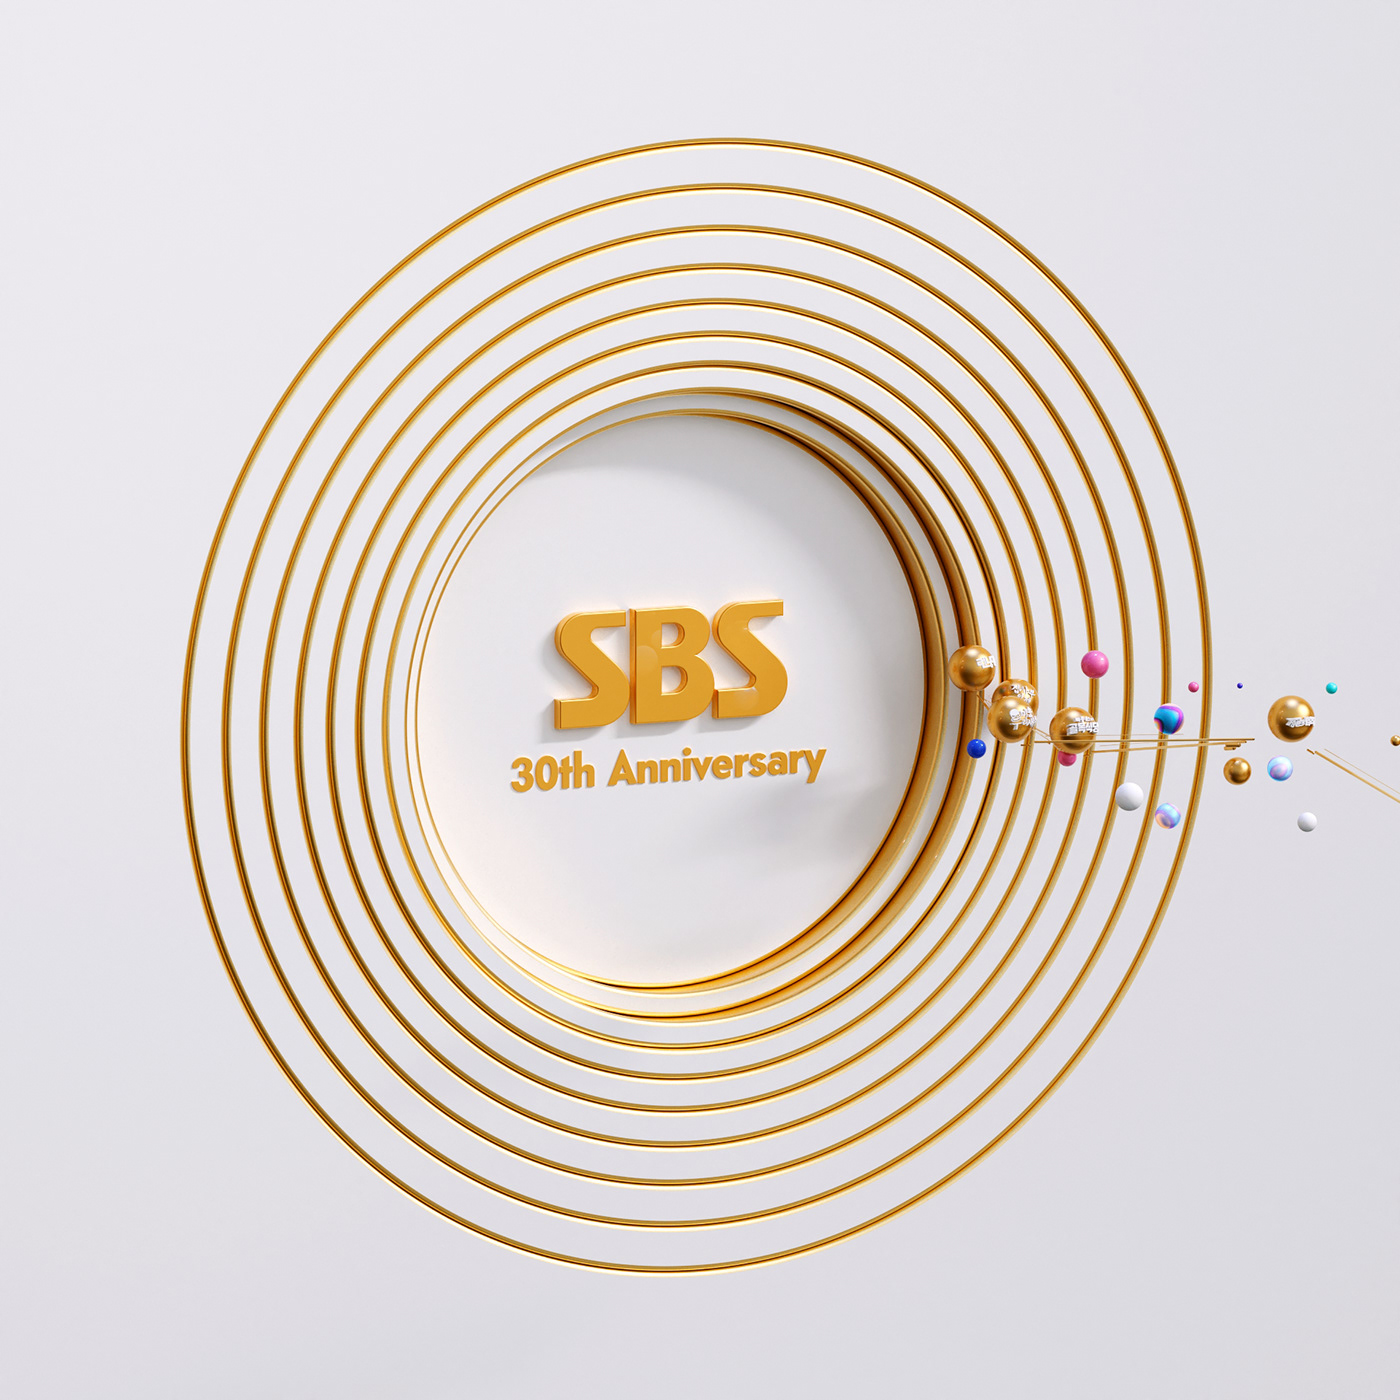 Awards Entertainment tv 3D 3dart CG SBS Planets Show universe